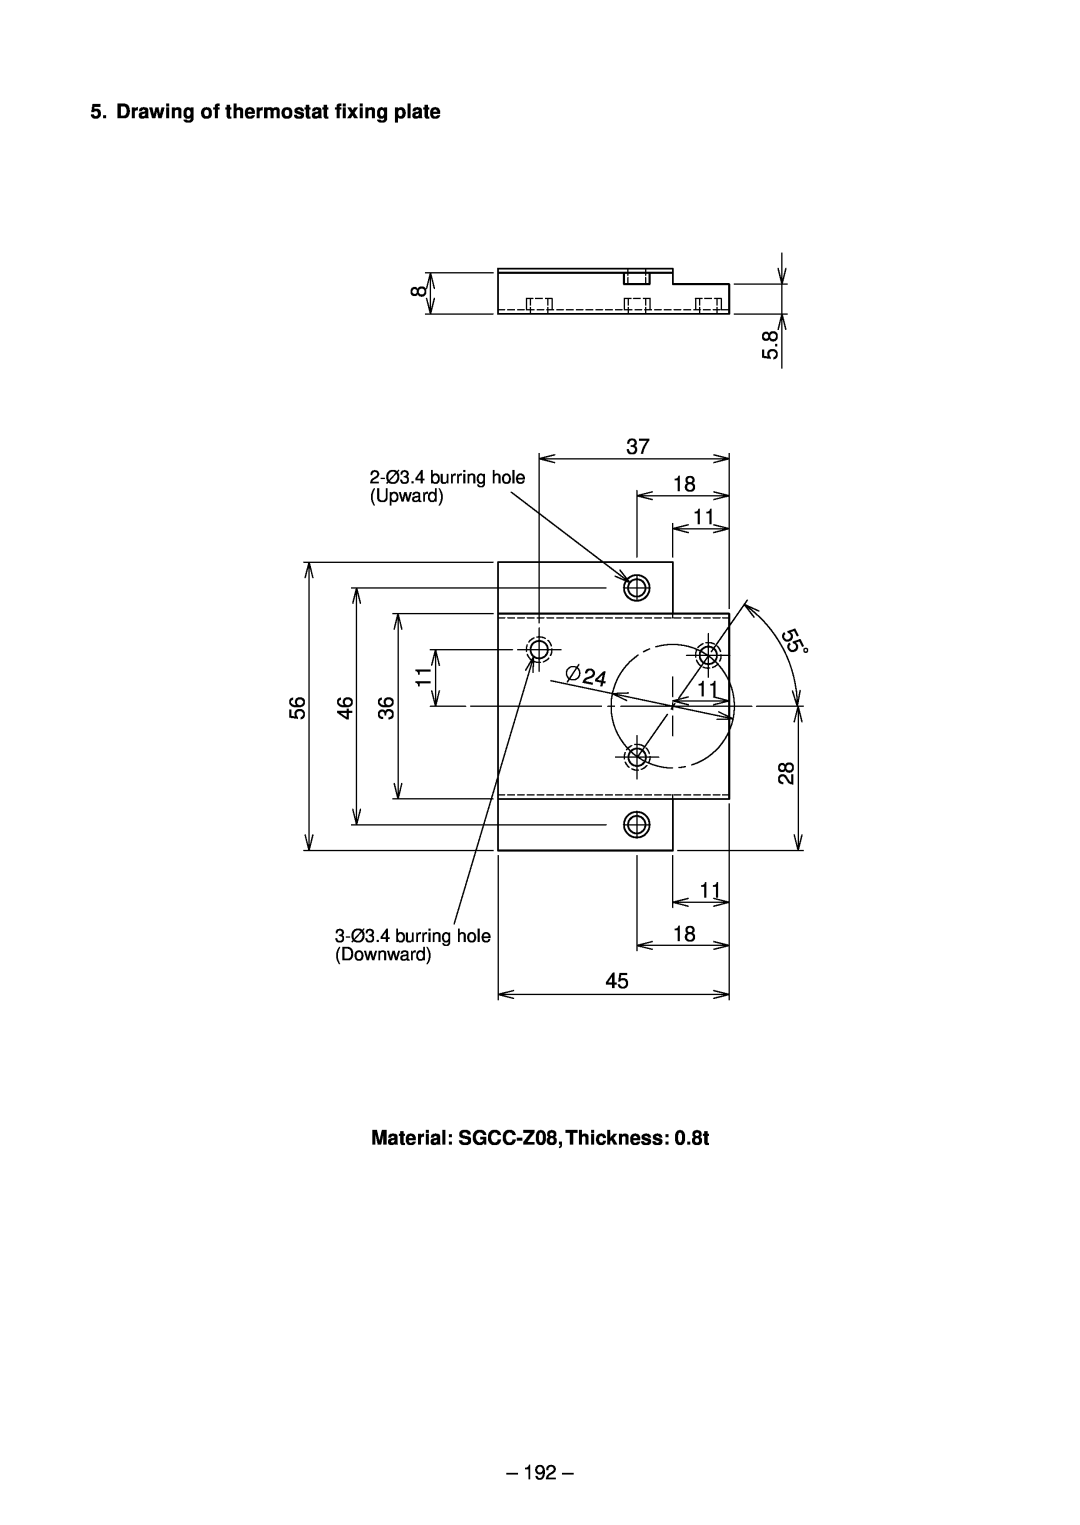 Toshiba RAV-SM1102UT-E, RAV-SM1402UT-E Drawing of thermostat fixing plate, Material: SGCC-Z08,Thickness: 0.8t, 192 